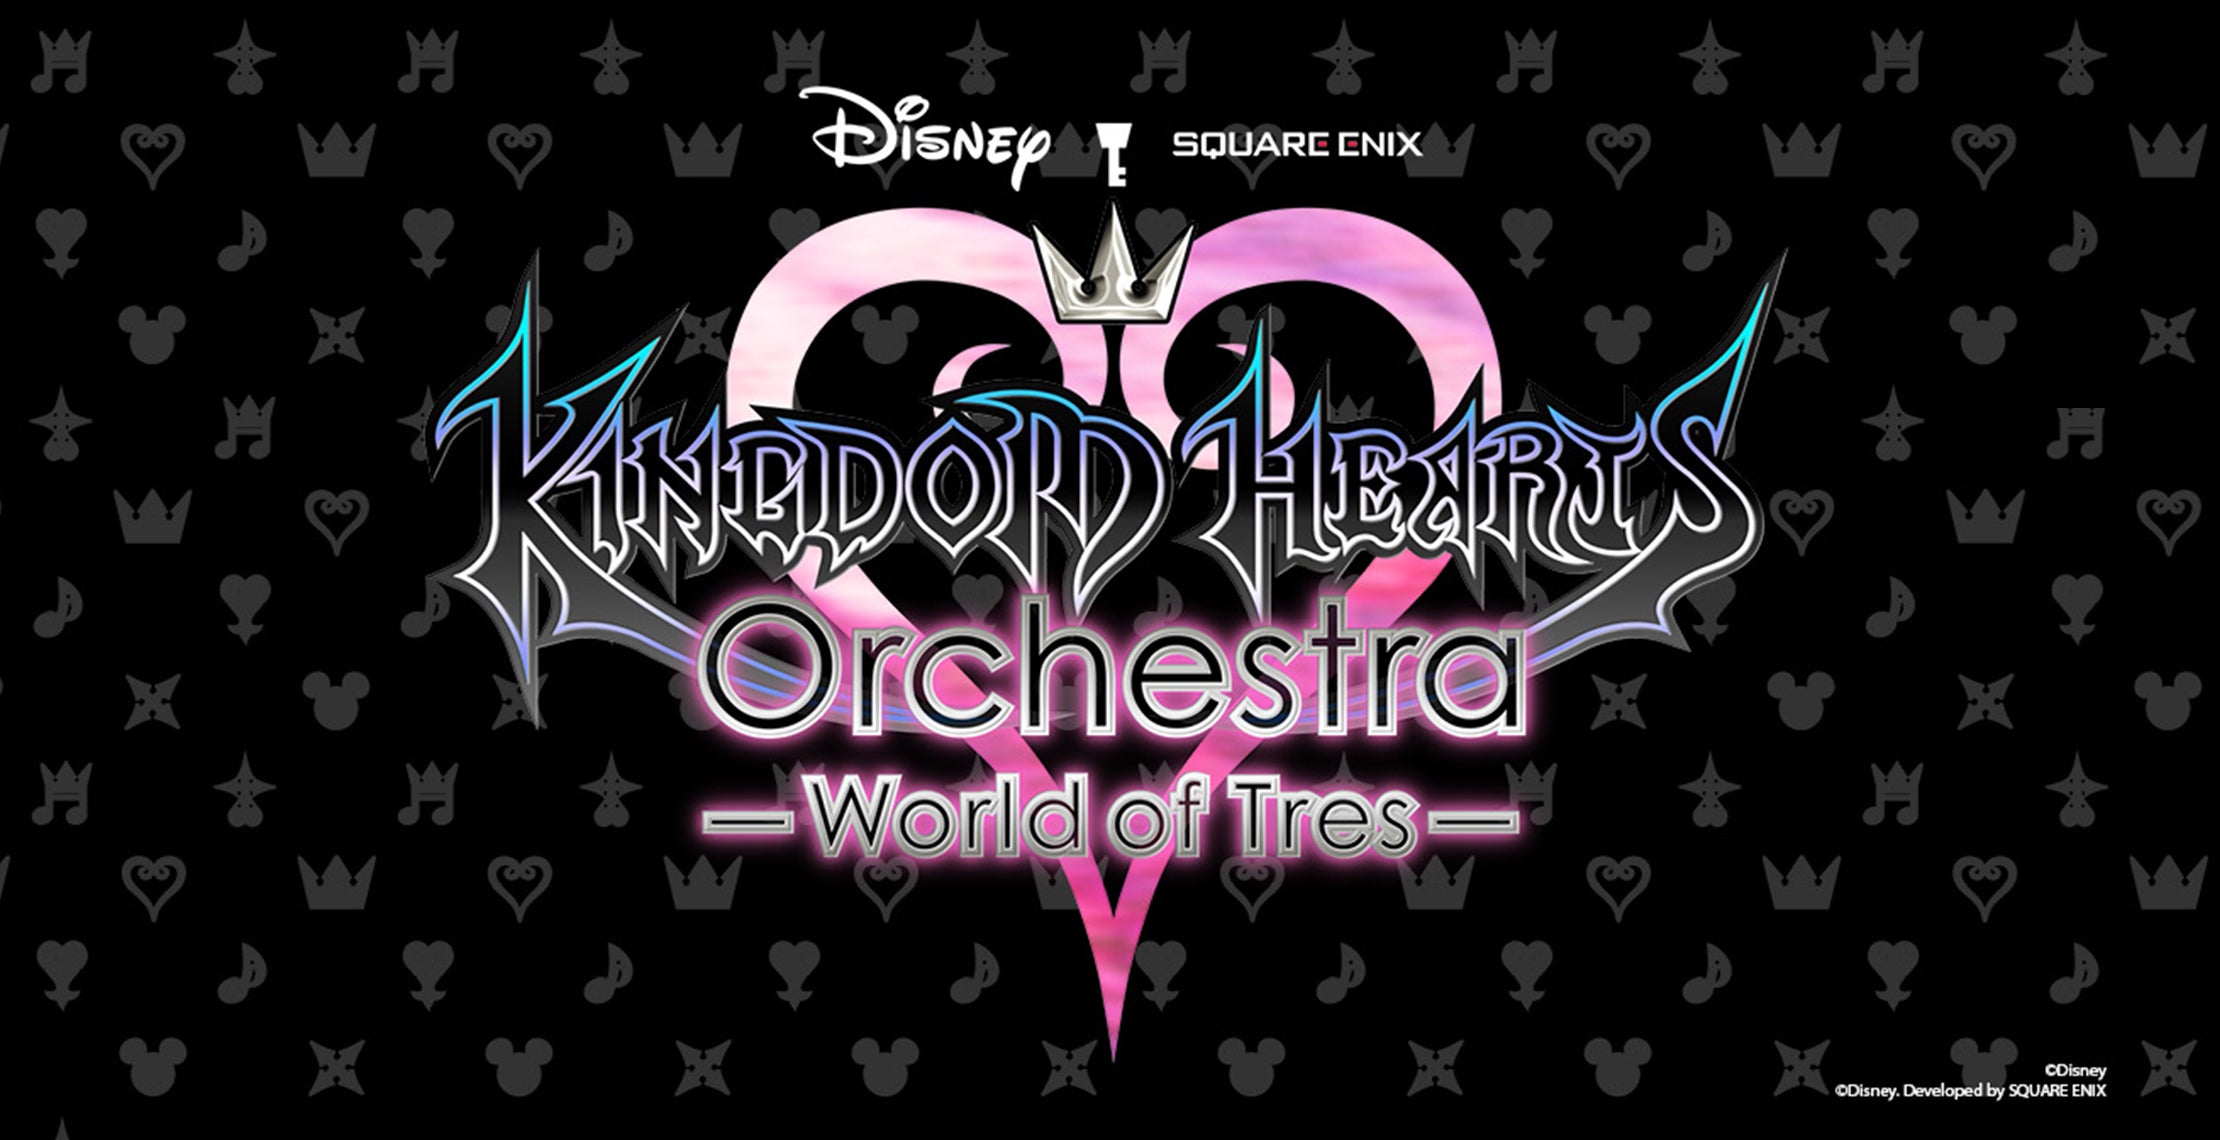 Kingdom Hearts Orchestra World Tour Concierge Services of Atlanta